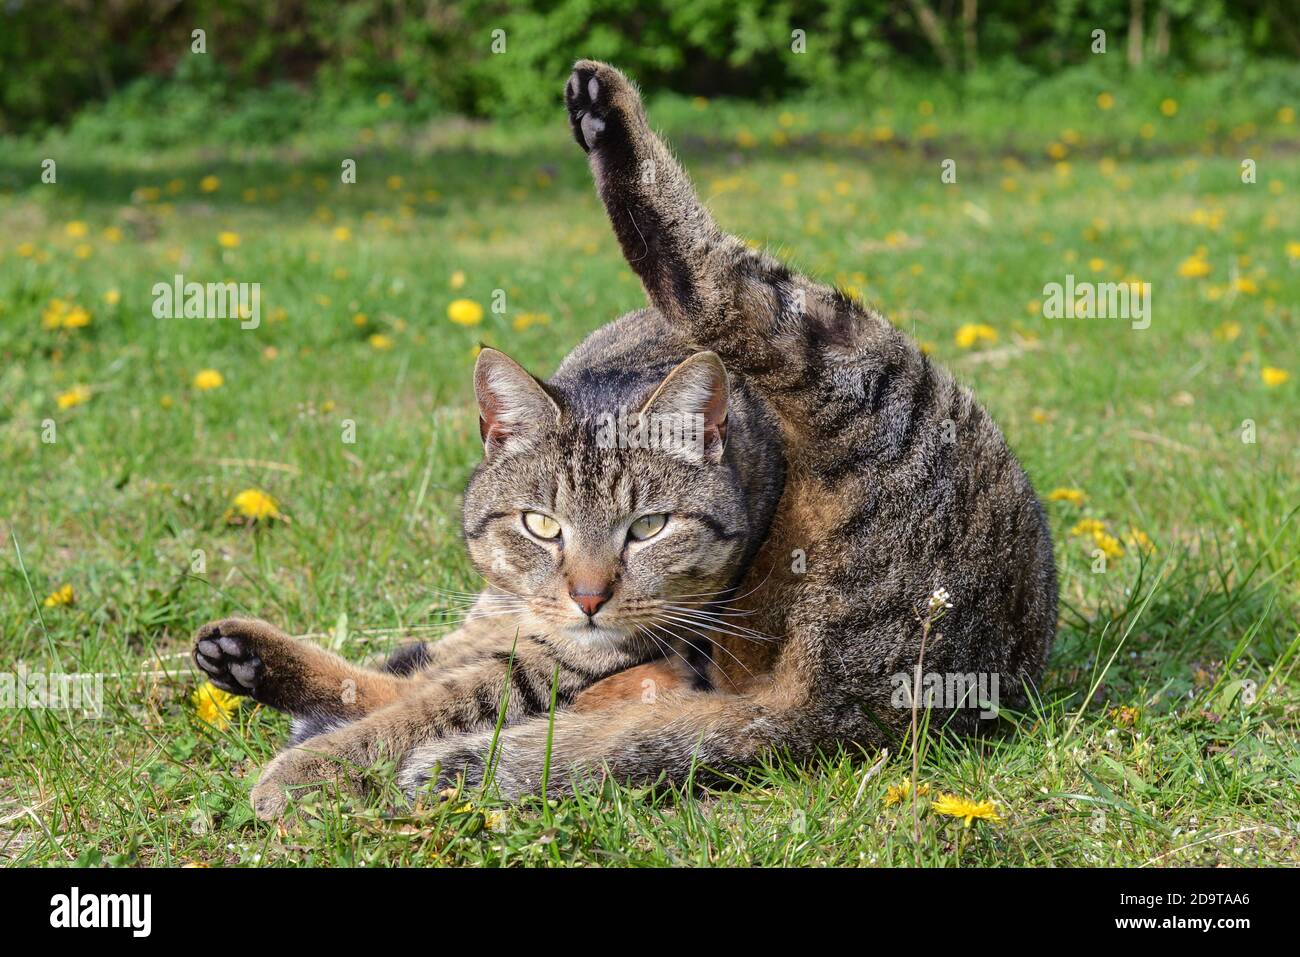 Katzen-Yoga: eine Katze übt komische Bewegungen auf dem Bauernhof - cat-yoga: a cat practising strange gymnastics at a farm Stock Photo